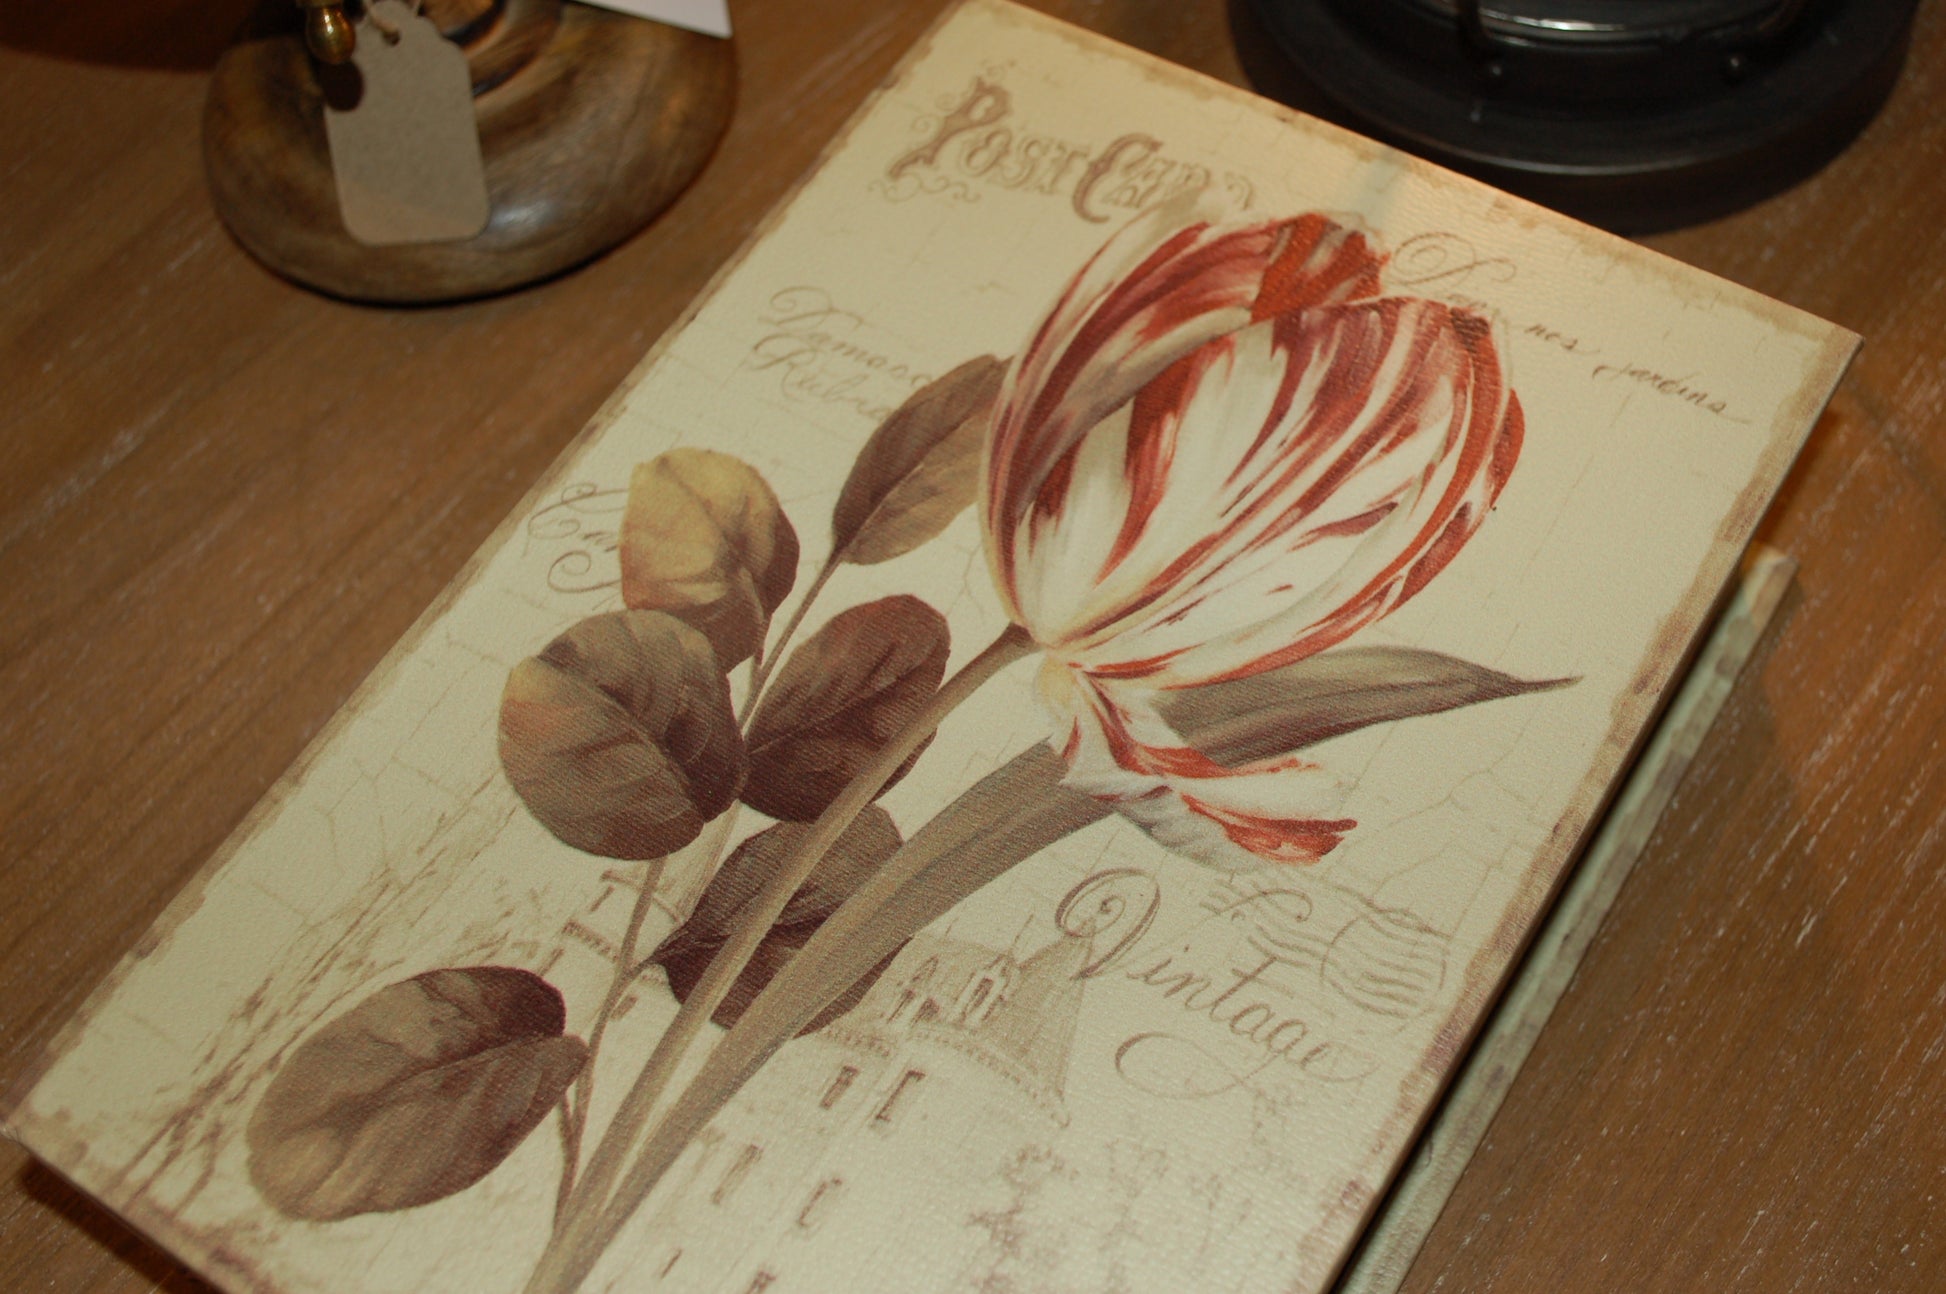 Fräck låda i form av en bok med blommigt motiv. Perfekt att gömma små saker i.   Mått: 27 x 18,5 cm, H 7 cm  Innermått: 23,5 x 16 cm, H 6 cm  Material: MDF